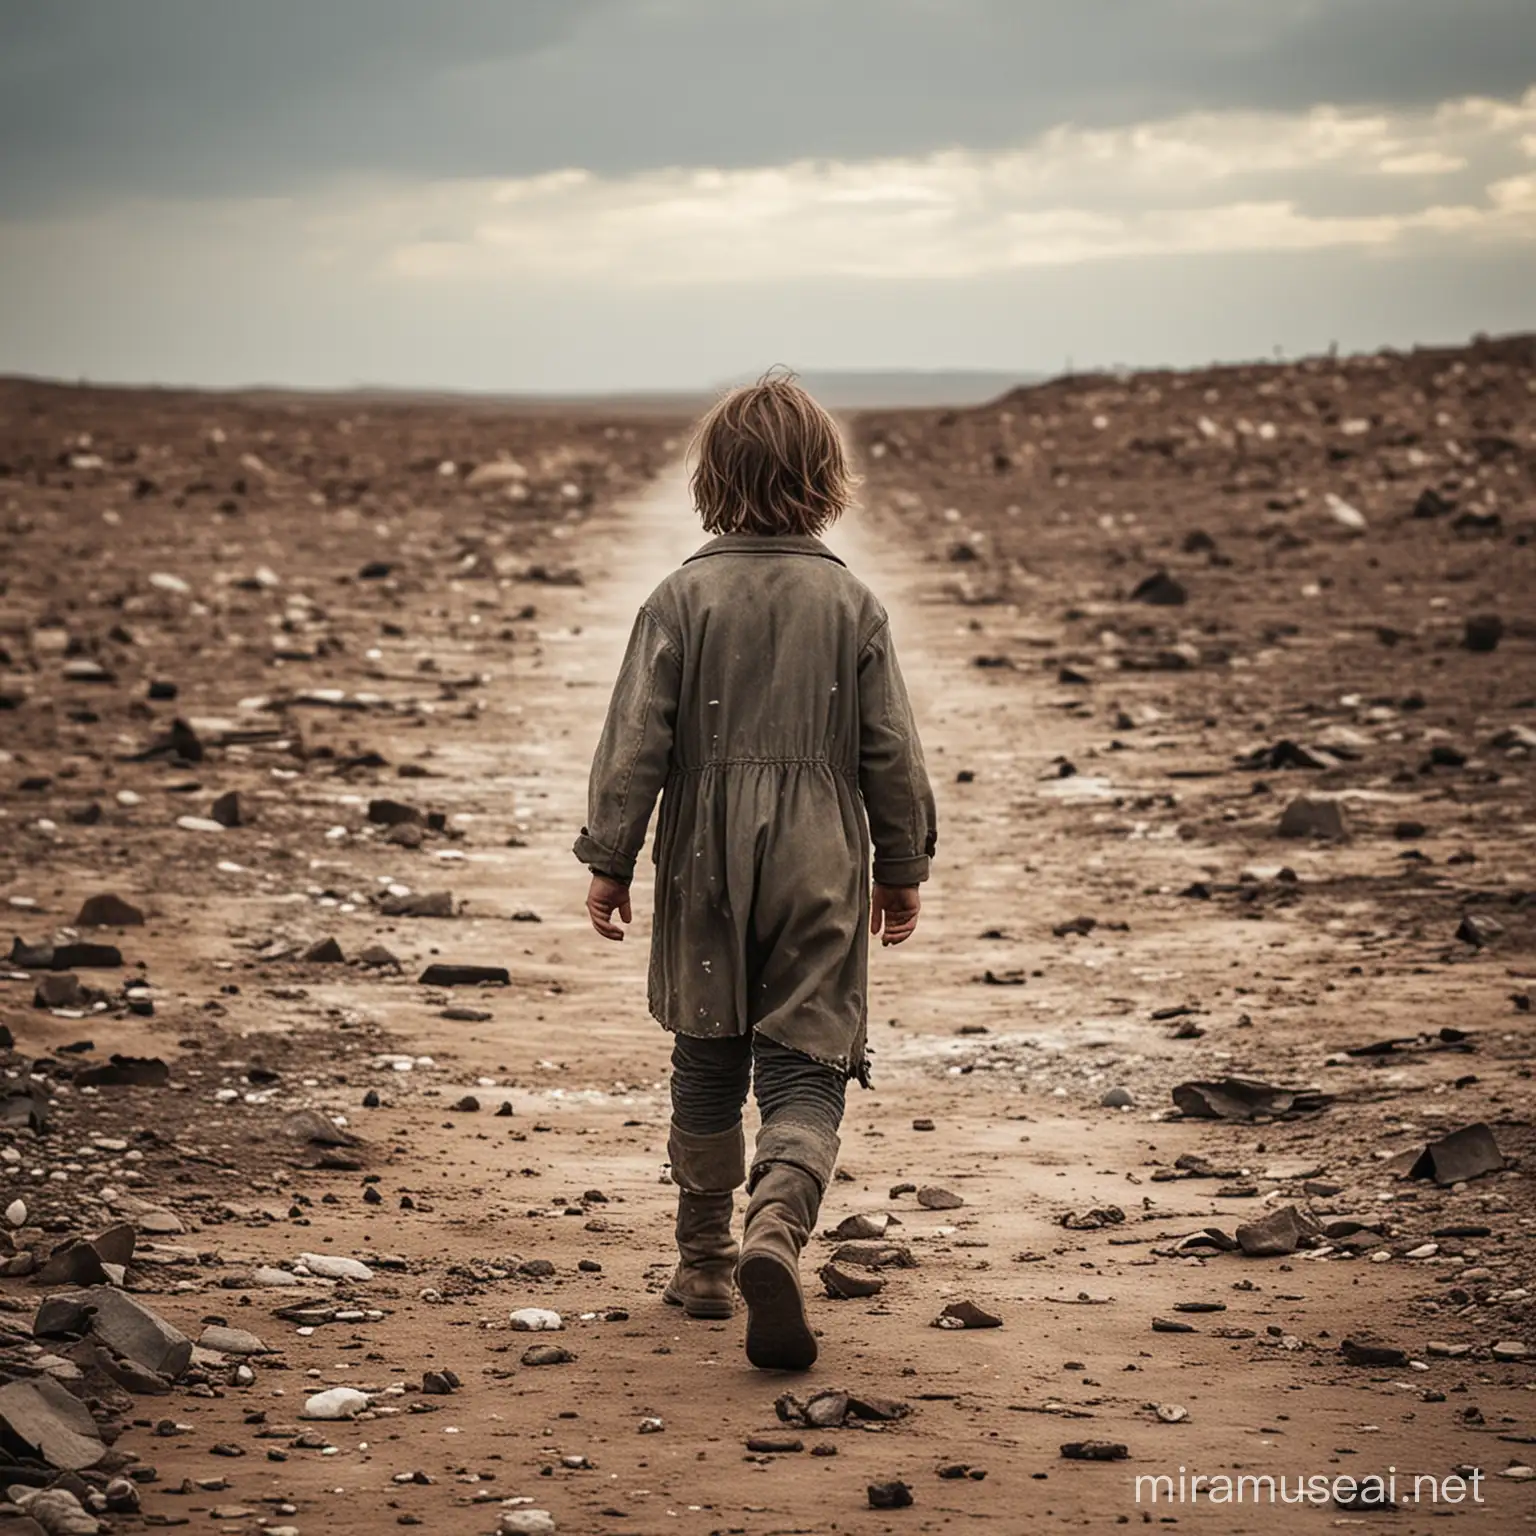 ragged child walking away in a wasteland